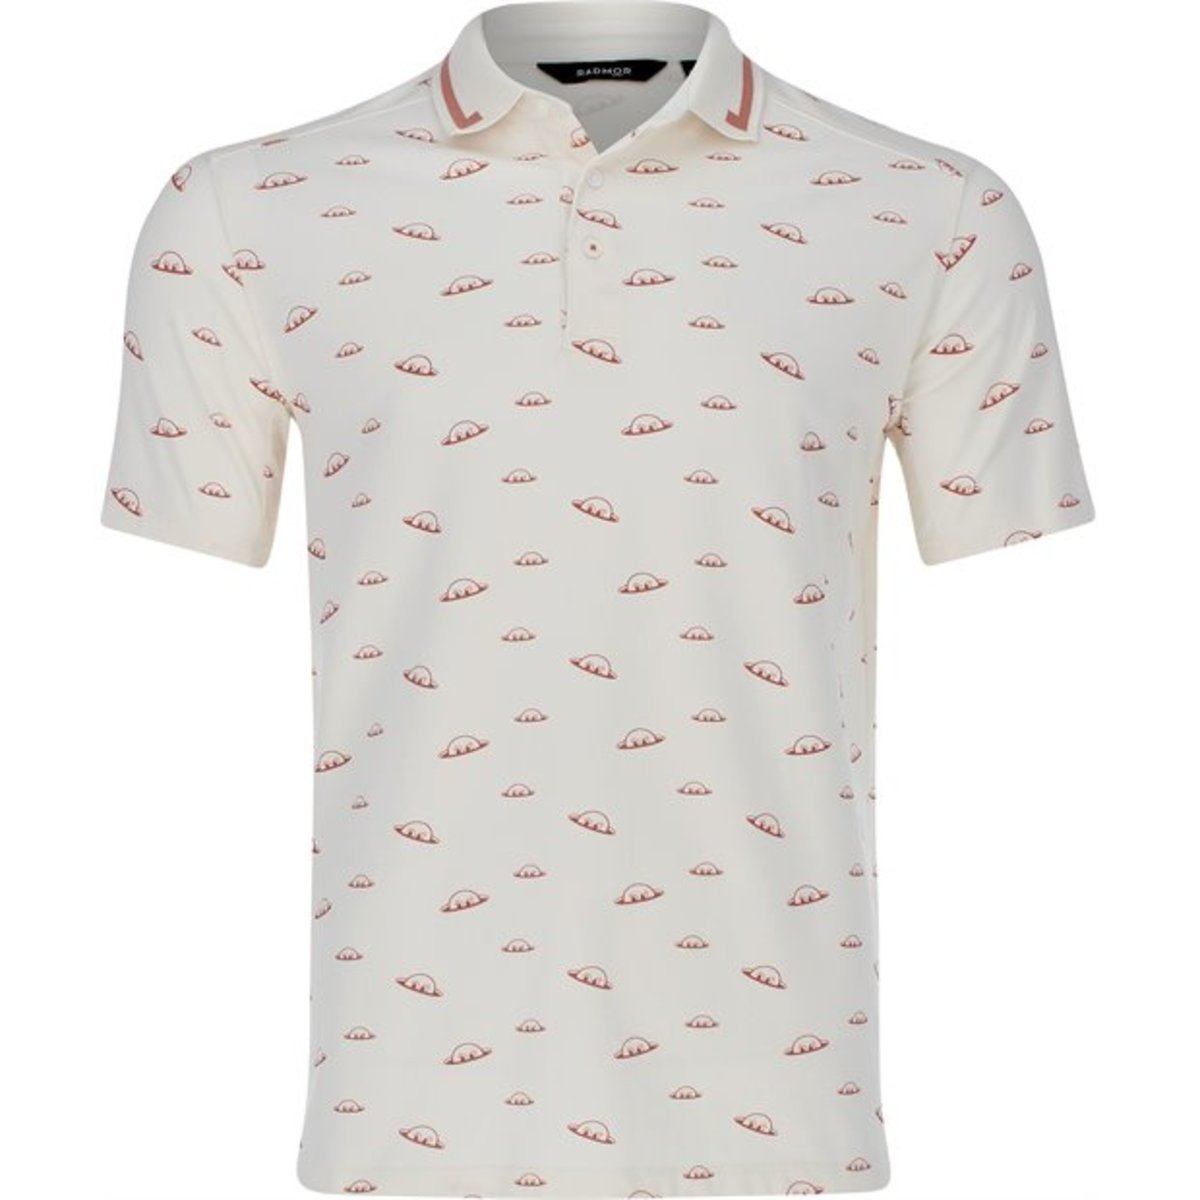 Shop the latest Radmor golf shirts on Morning Read's online pro shop.